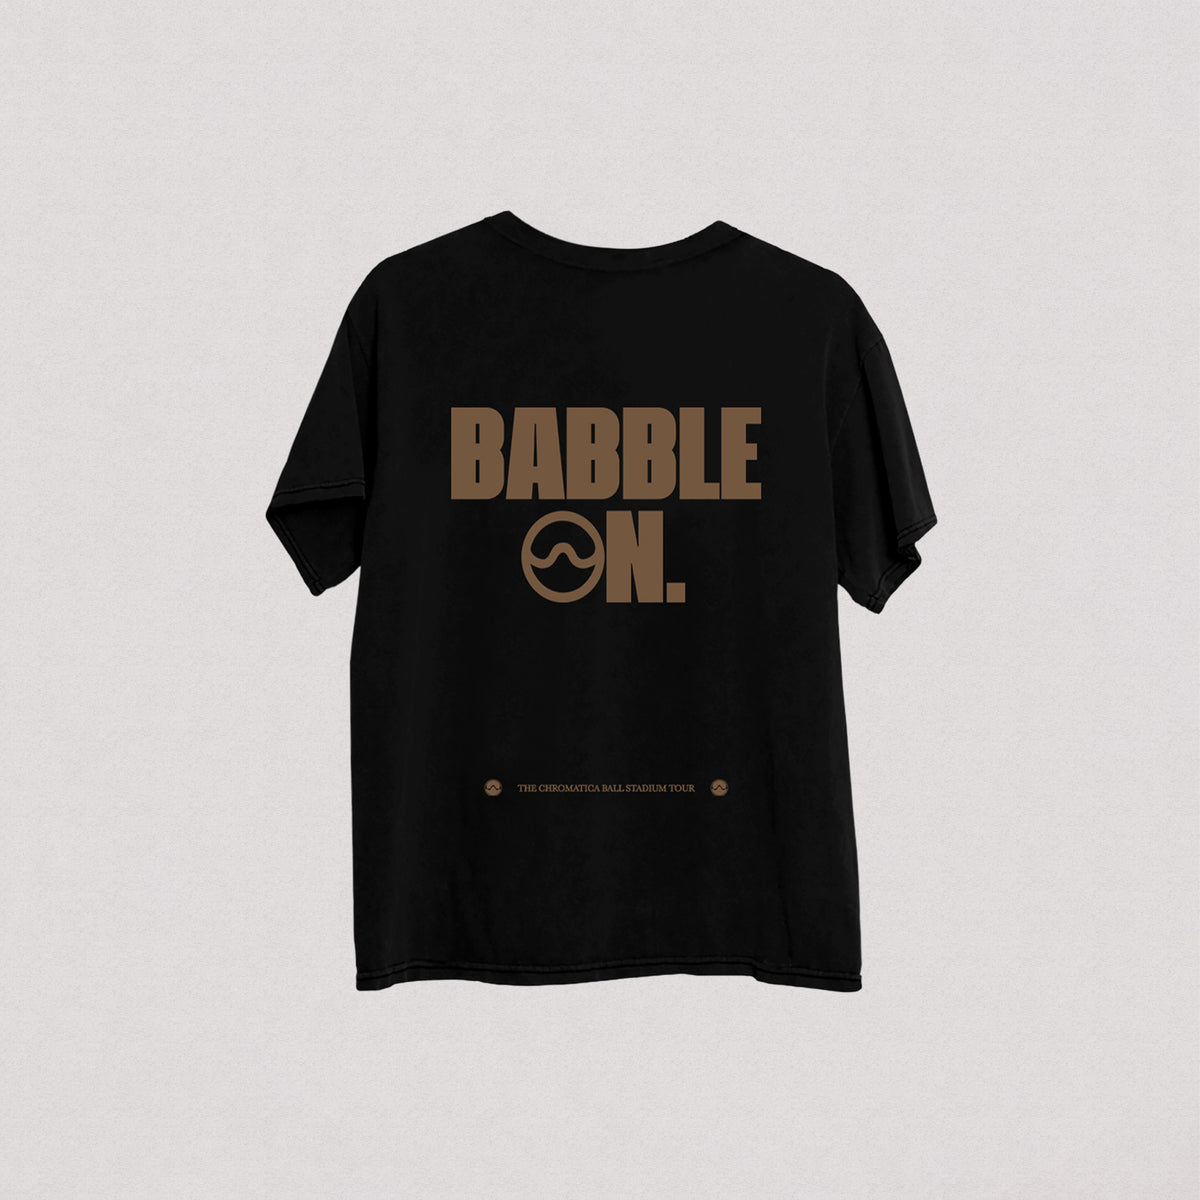 Lady Gaga - Babble On (T-Shirt)